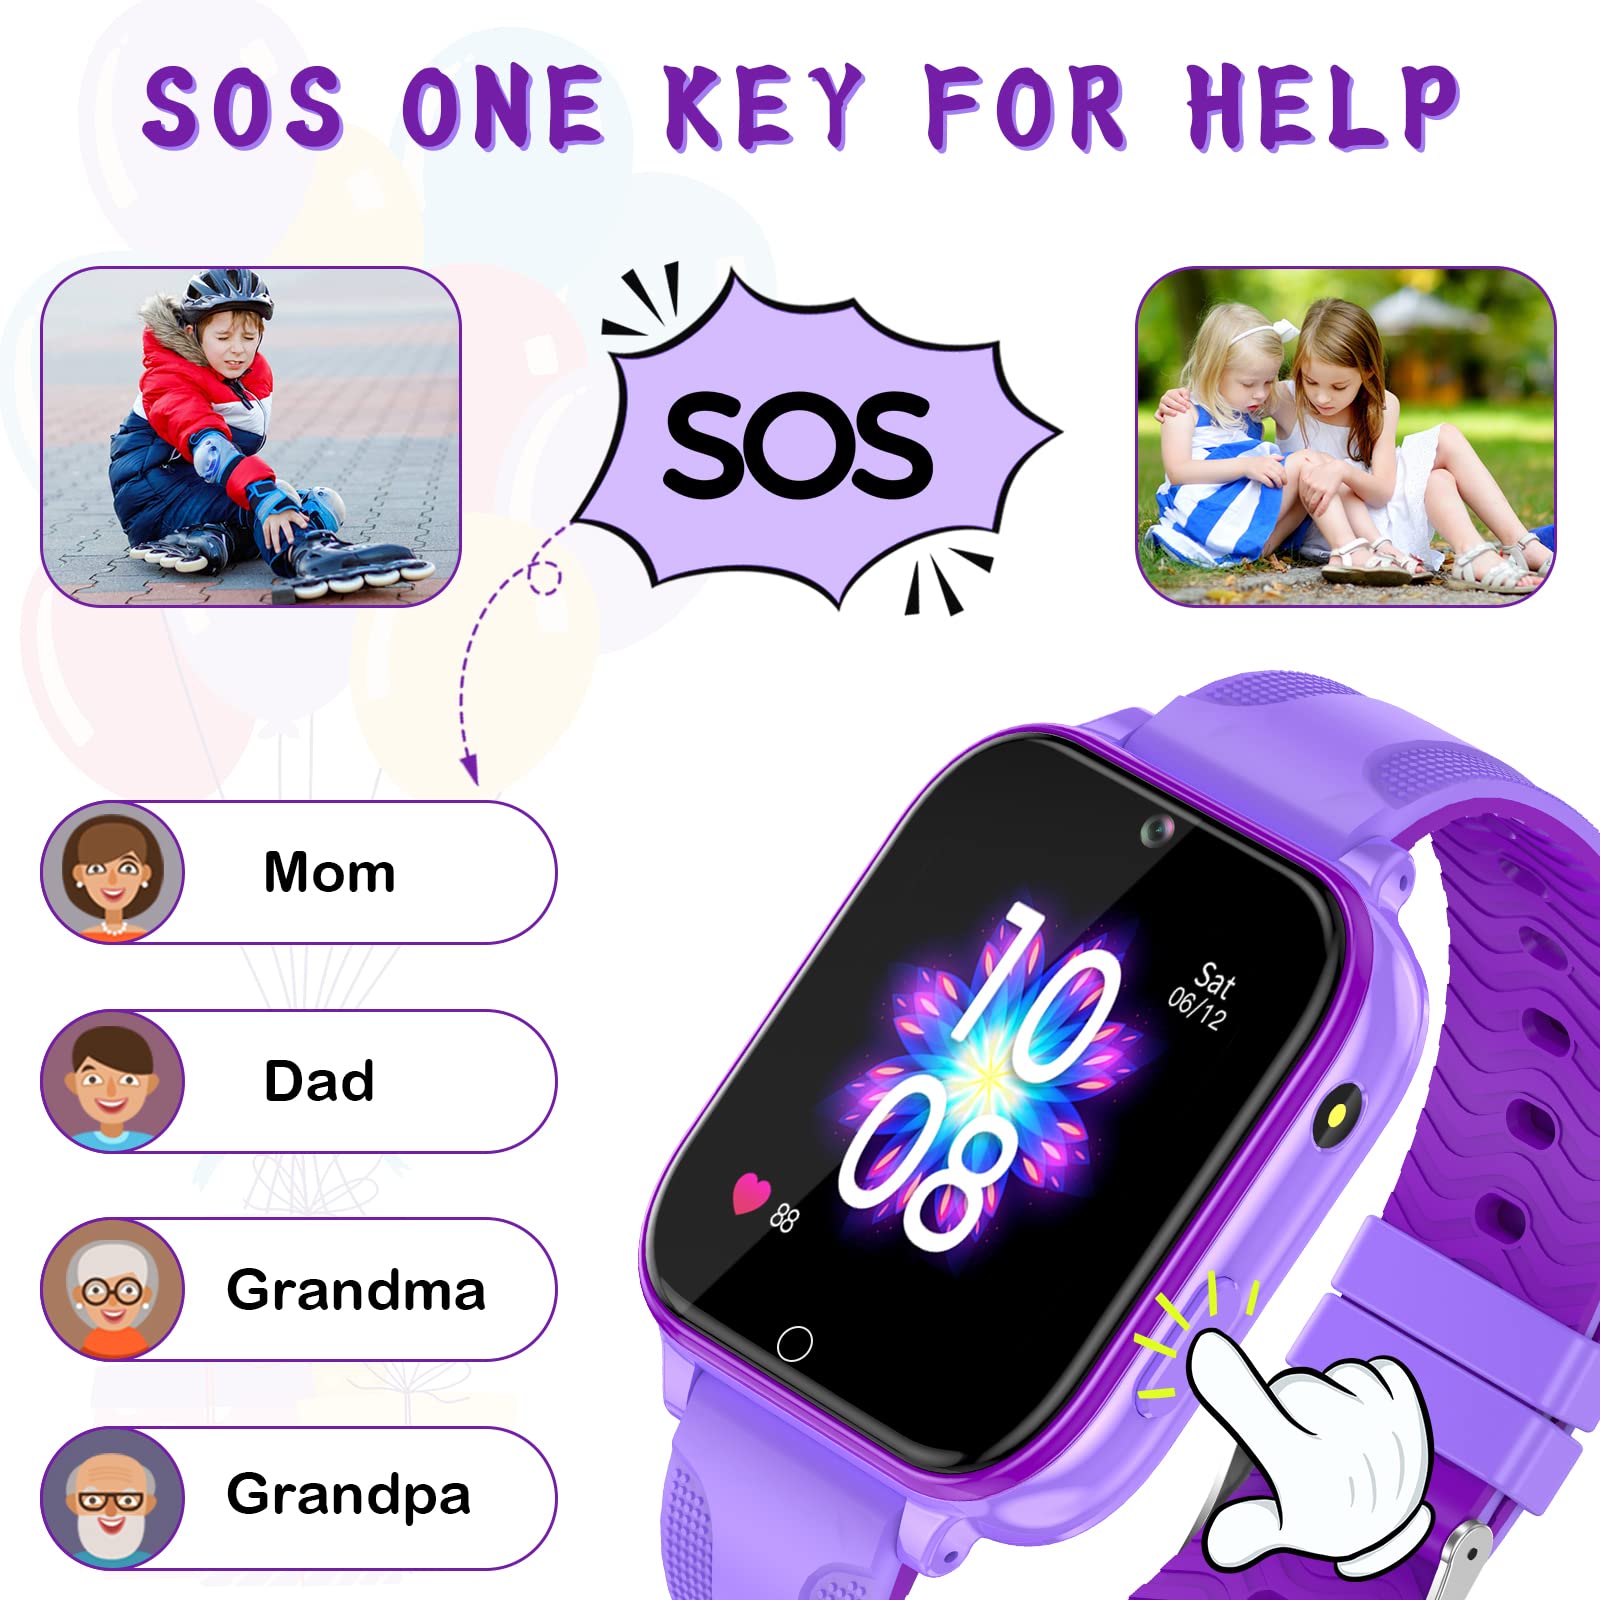 cjc 4G Kids Smart Watch for Kids, 1.6